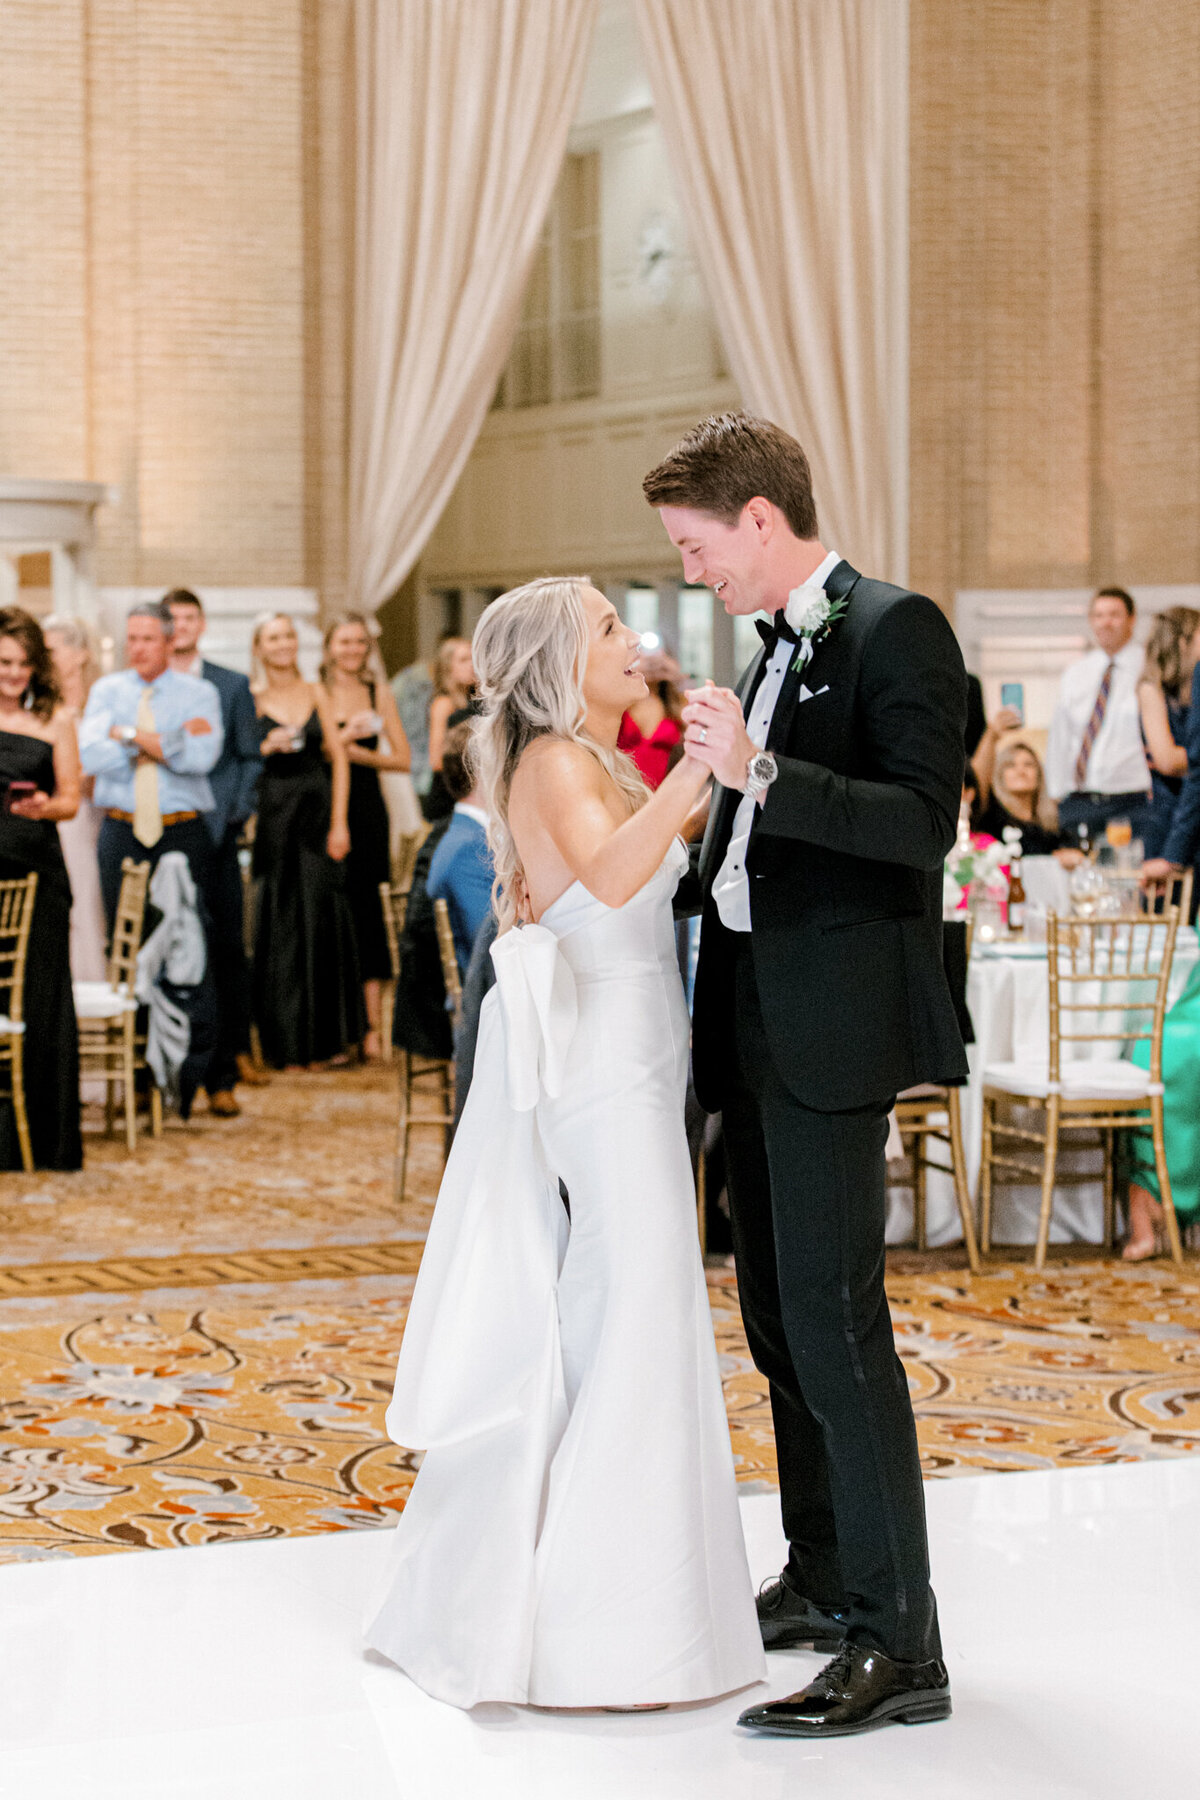 Madison & Michael's Wedding at Union Station | Dallas Wedding Photographer | Sami Kathryn Photography-200